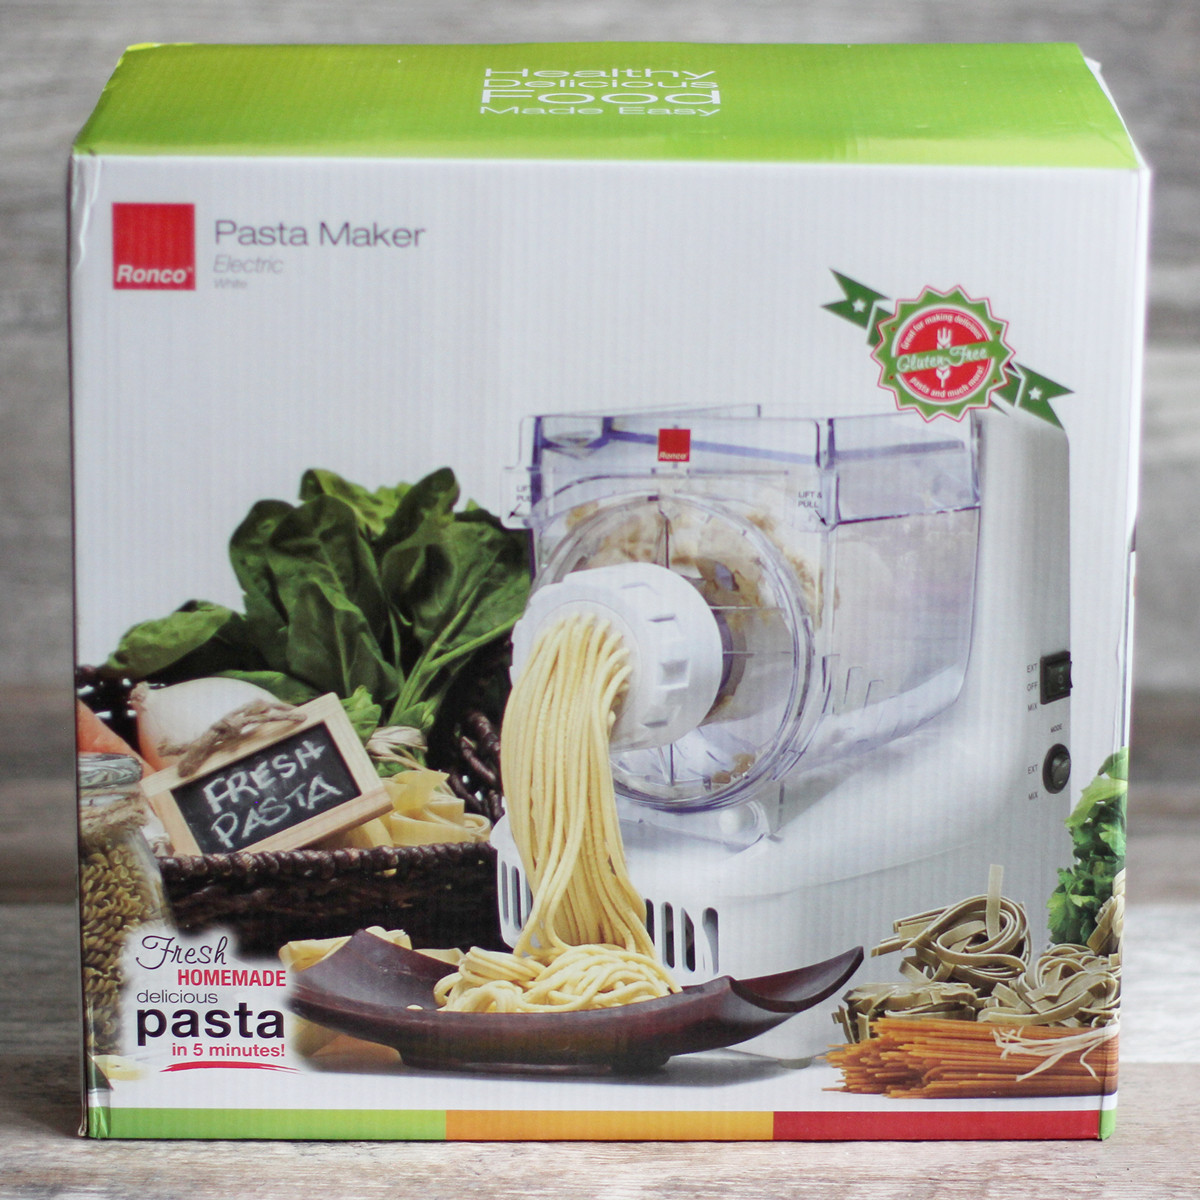 Automatic Pasta Maker Machine Ronco Pasta Maker 5 Types of Pasta Noodle Dies 